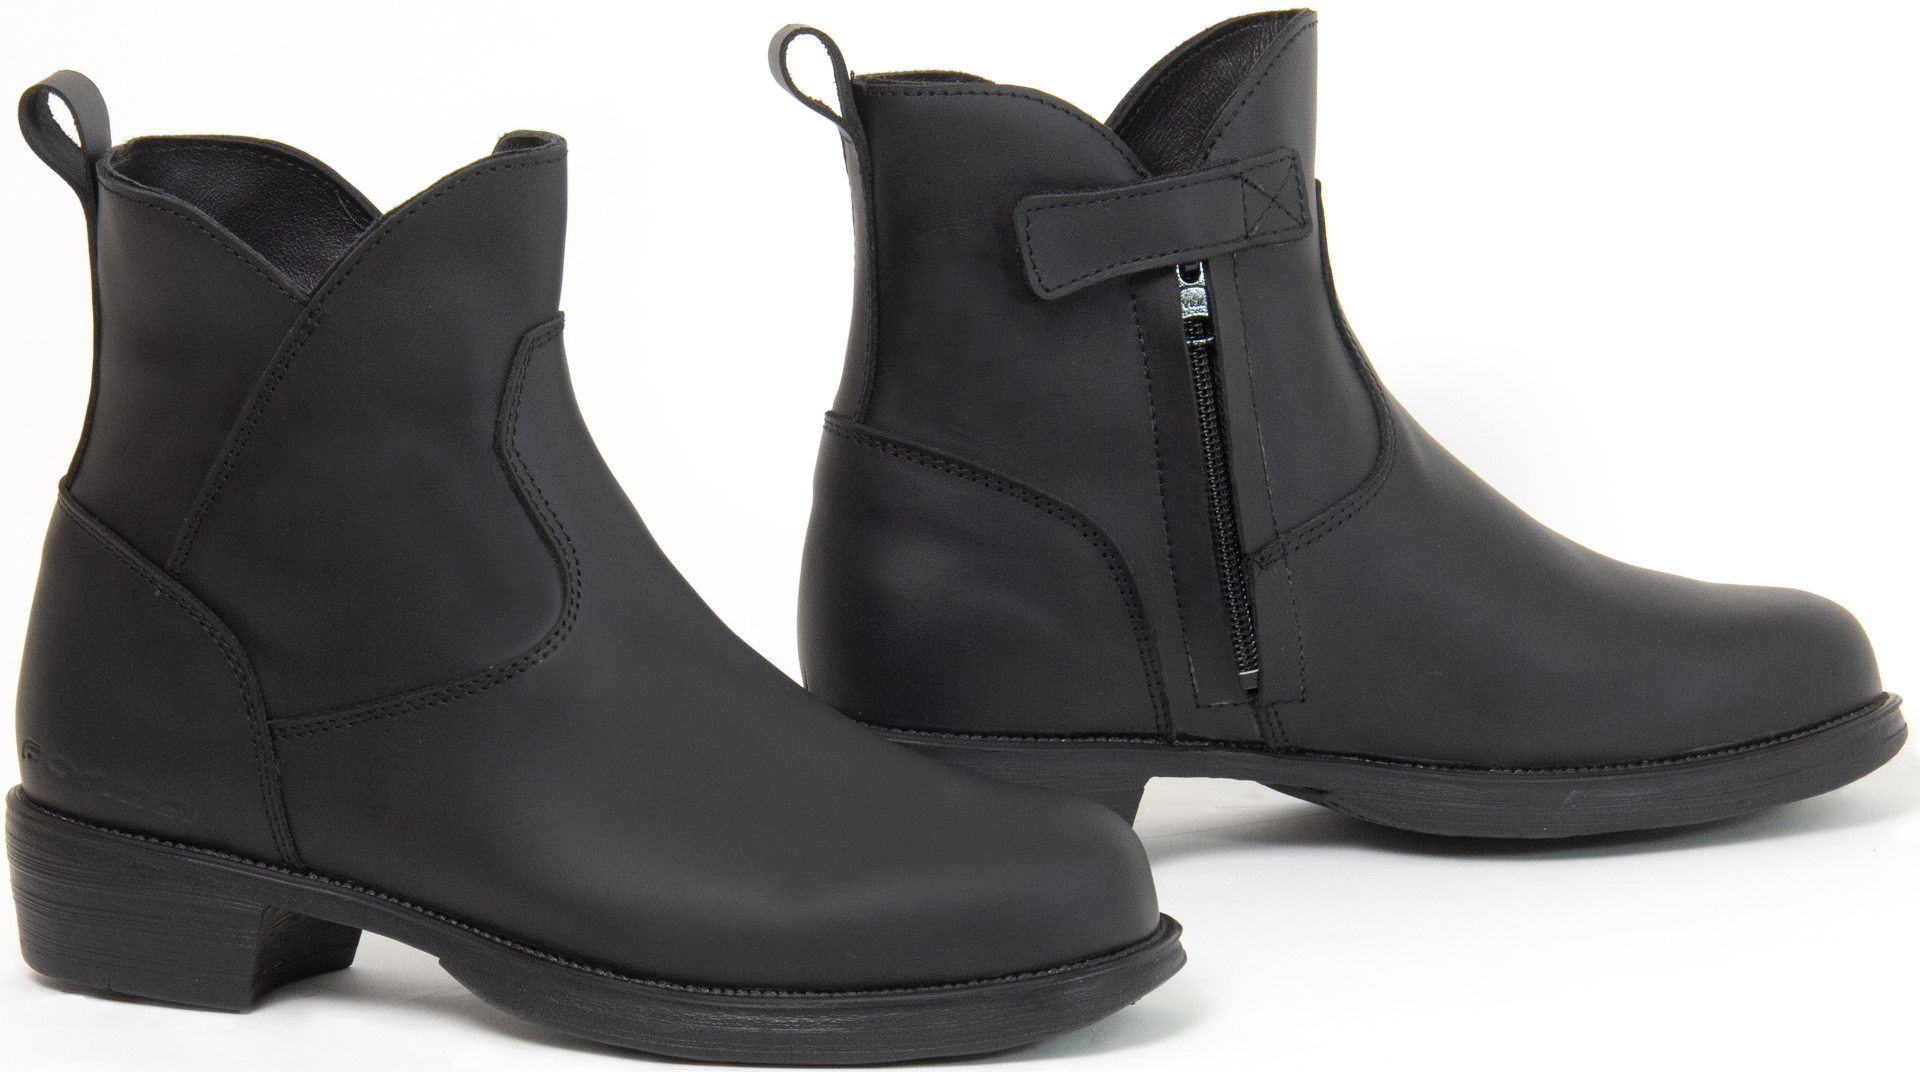 Forma Joy Dry Ladies Motorcycle Boots, black, Size 39 for Women, black, Size 39 for Women